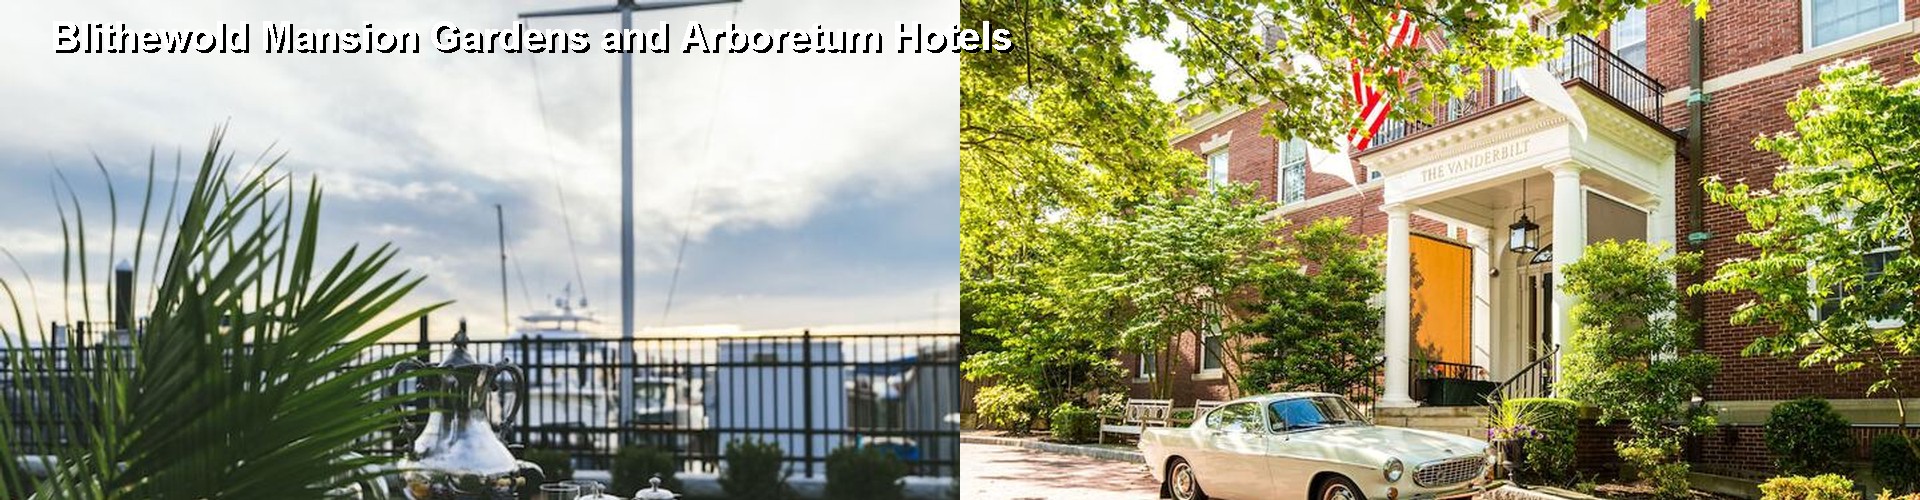 5 Best Hotels near Blithewold Mansion Gardens and Arboretum